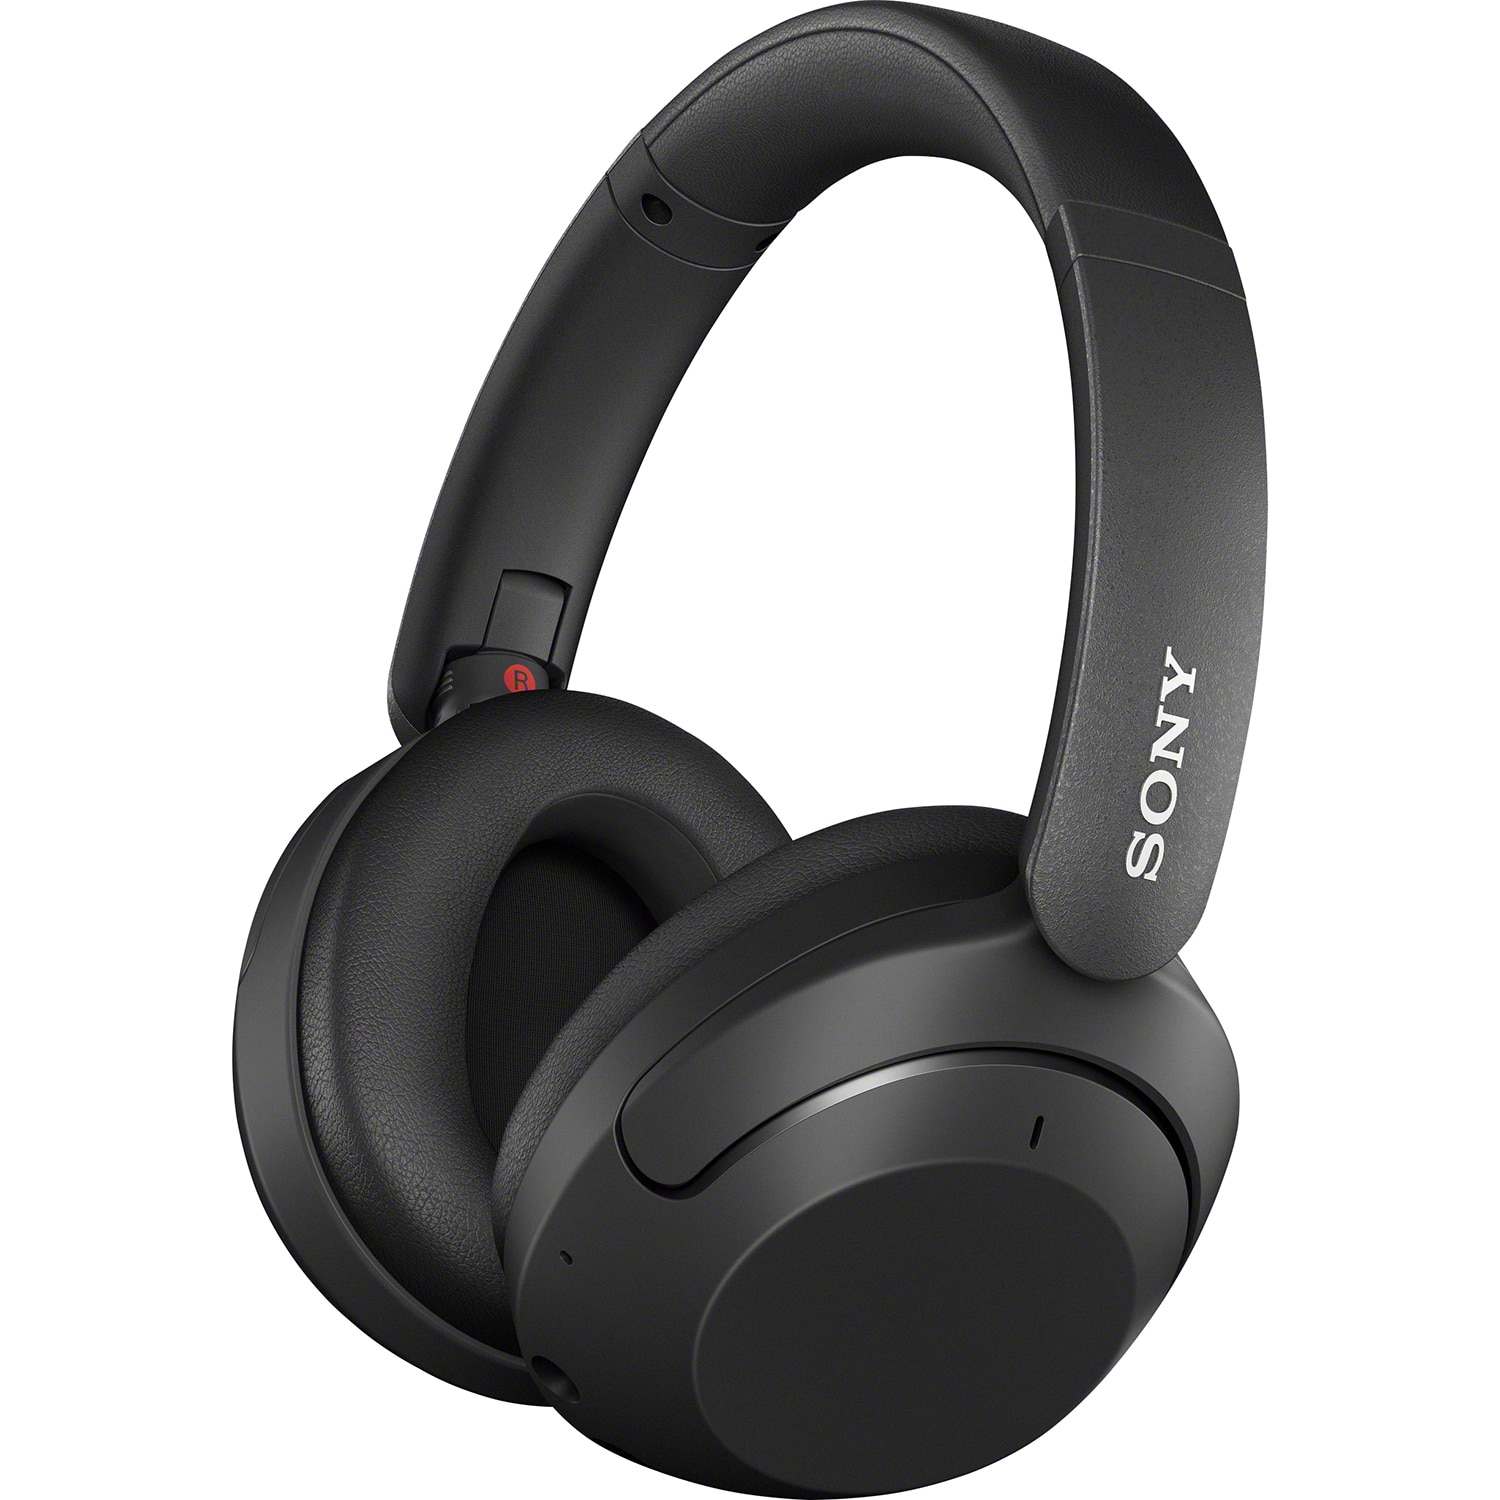 Sony EXTRA BASS Wireless Noise Canceling Headphones, Black